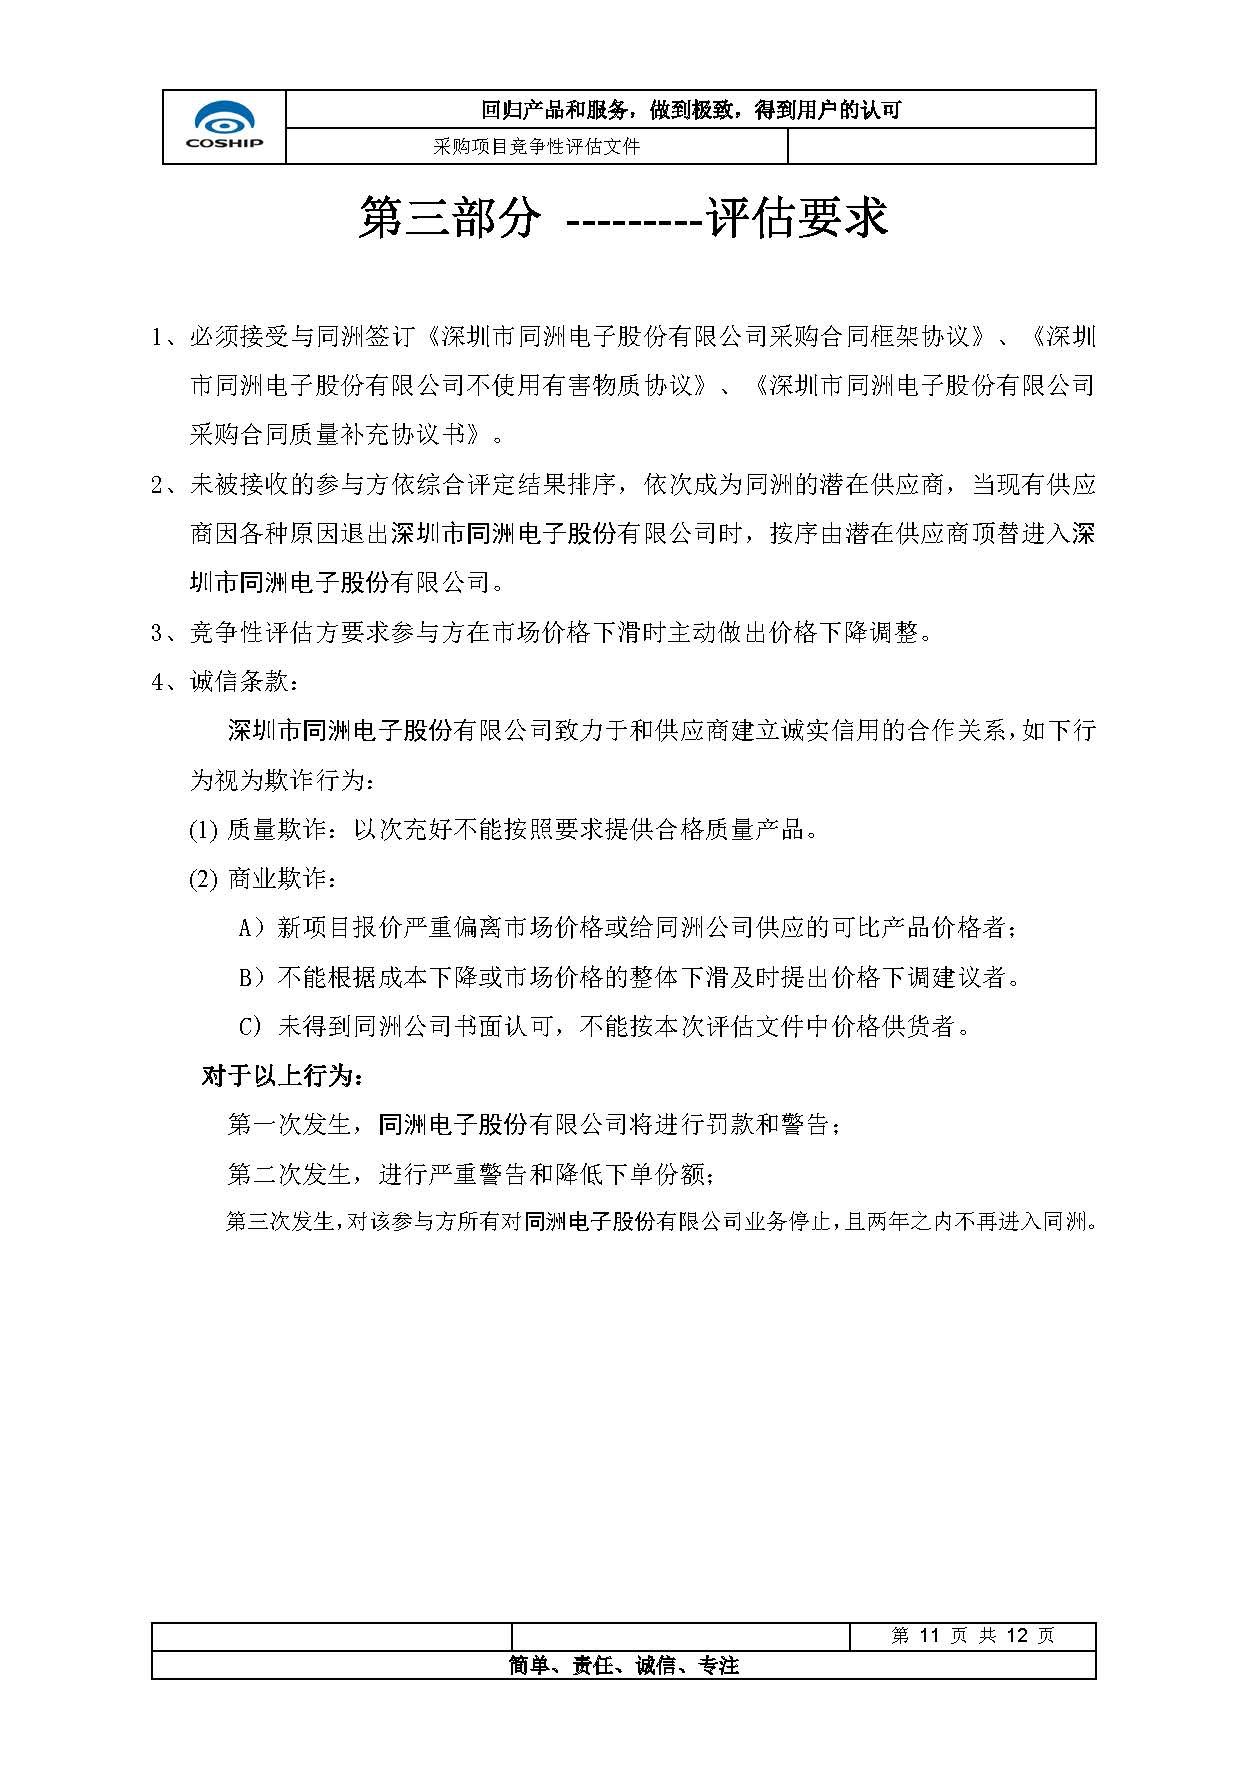 Shenzhen Tongzhou Electronics R&D Laboratory Project Equipment Procurement Bidding Announcement (First Batch)